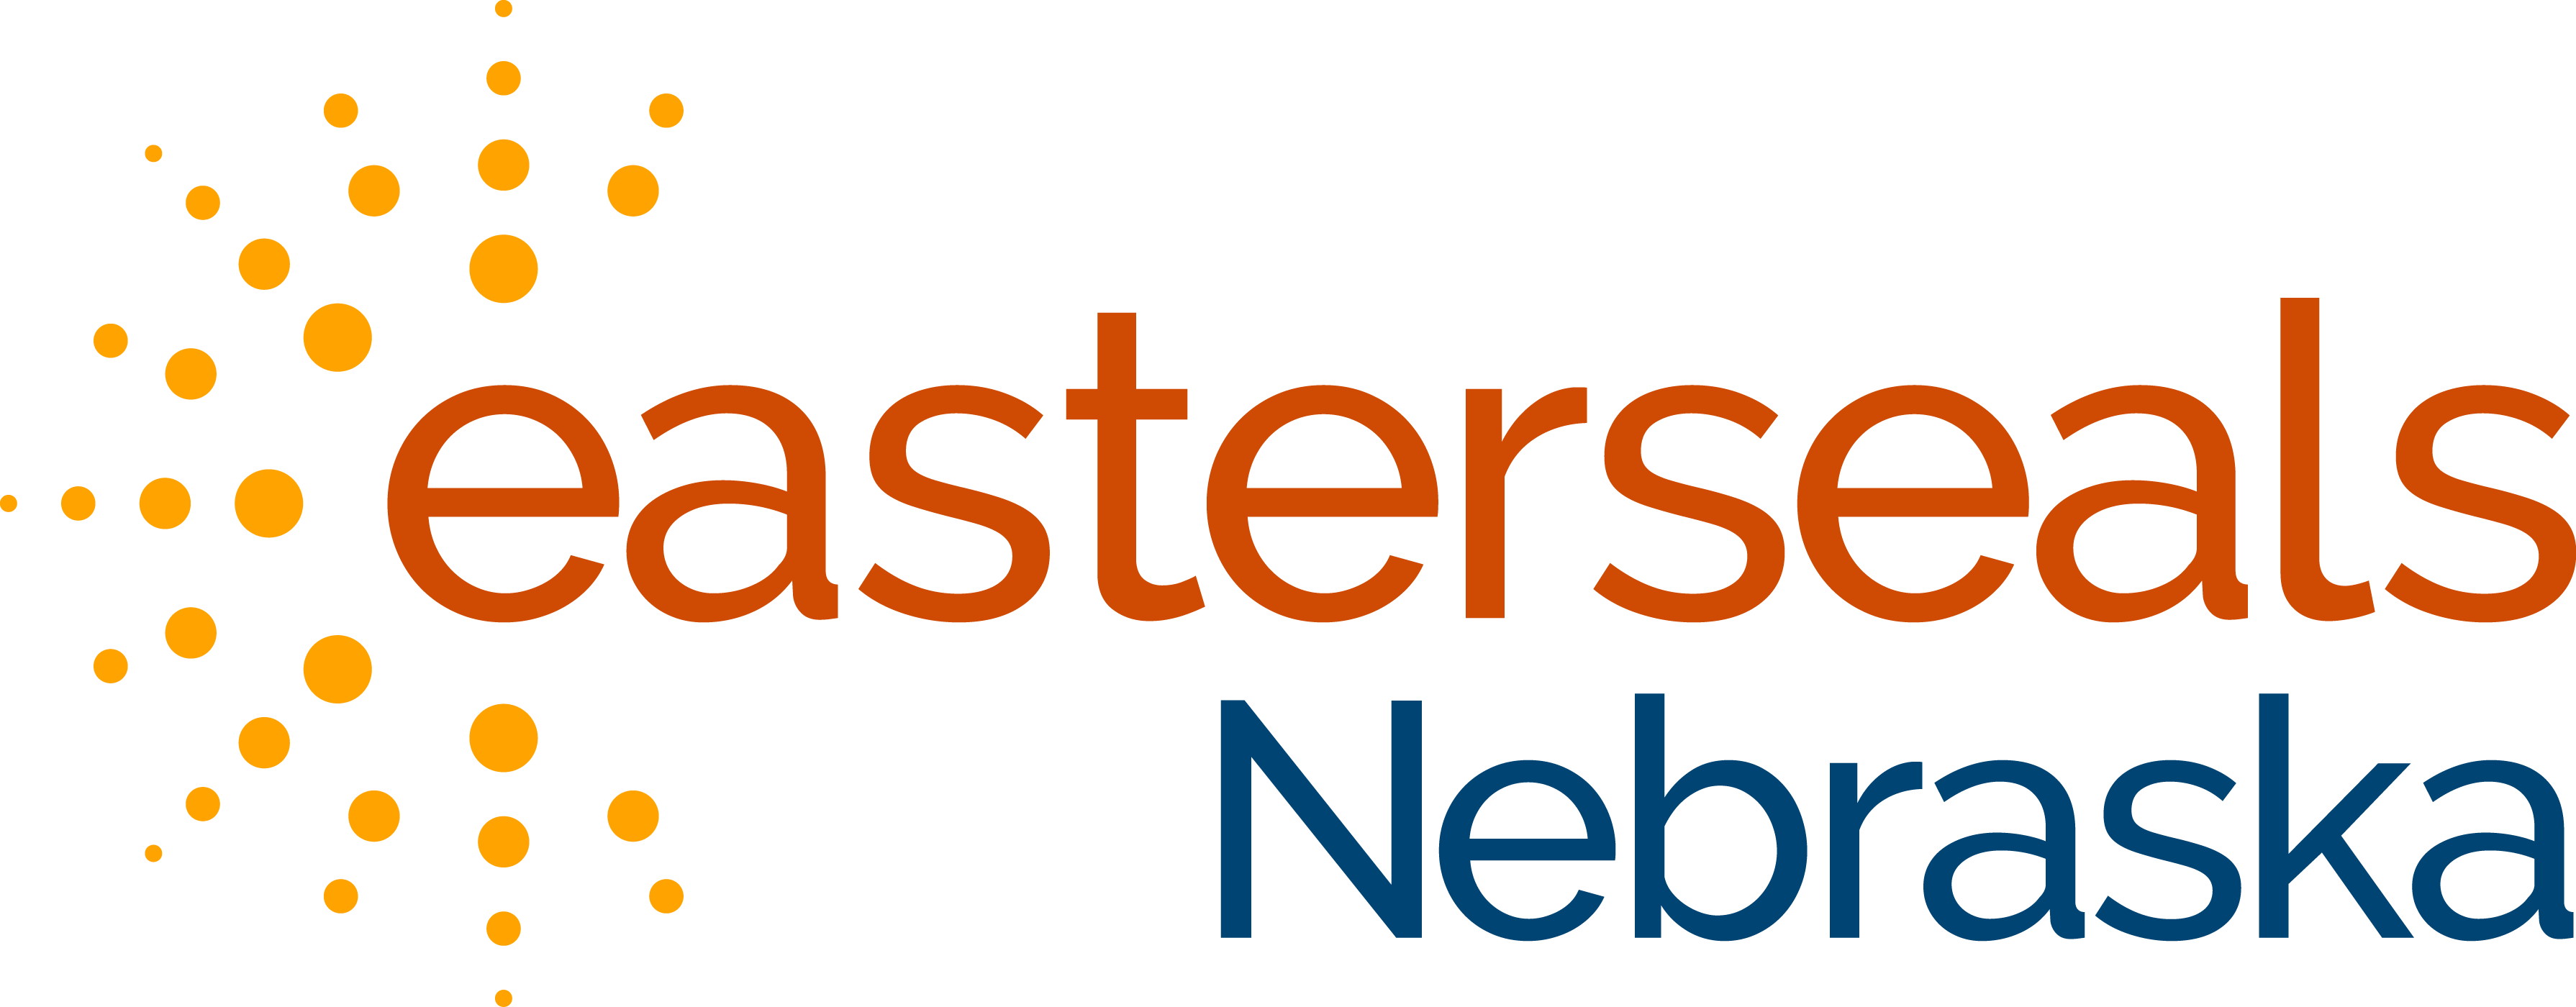 Easterseals Nebraska Logo